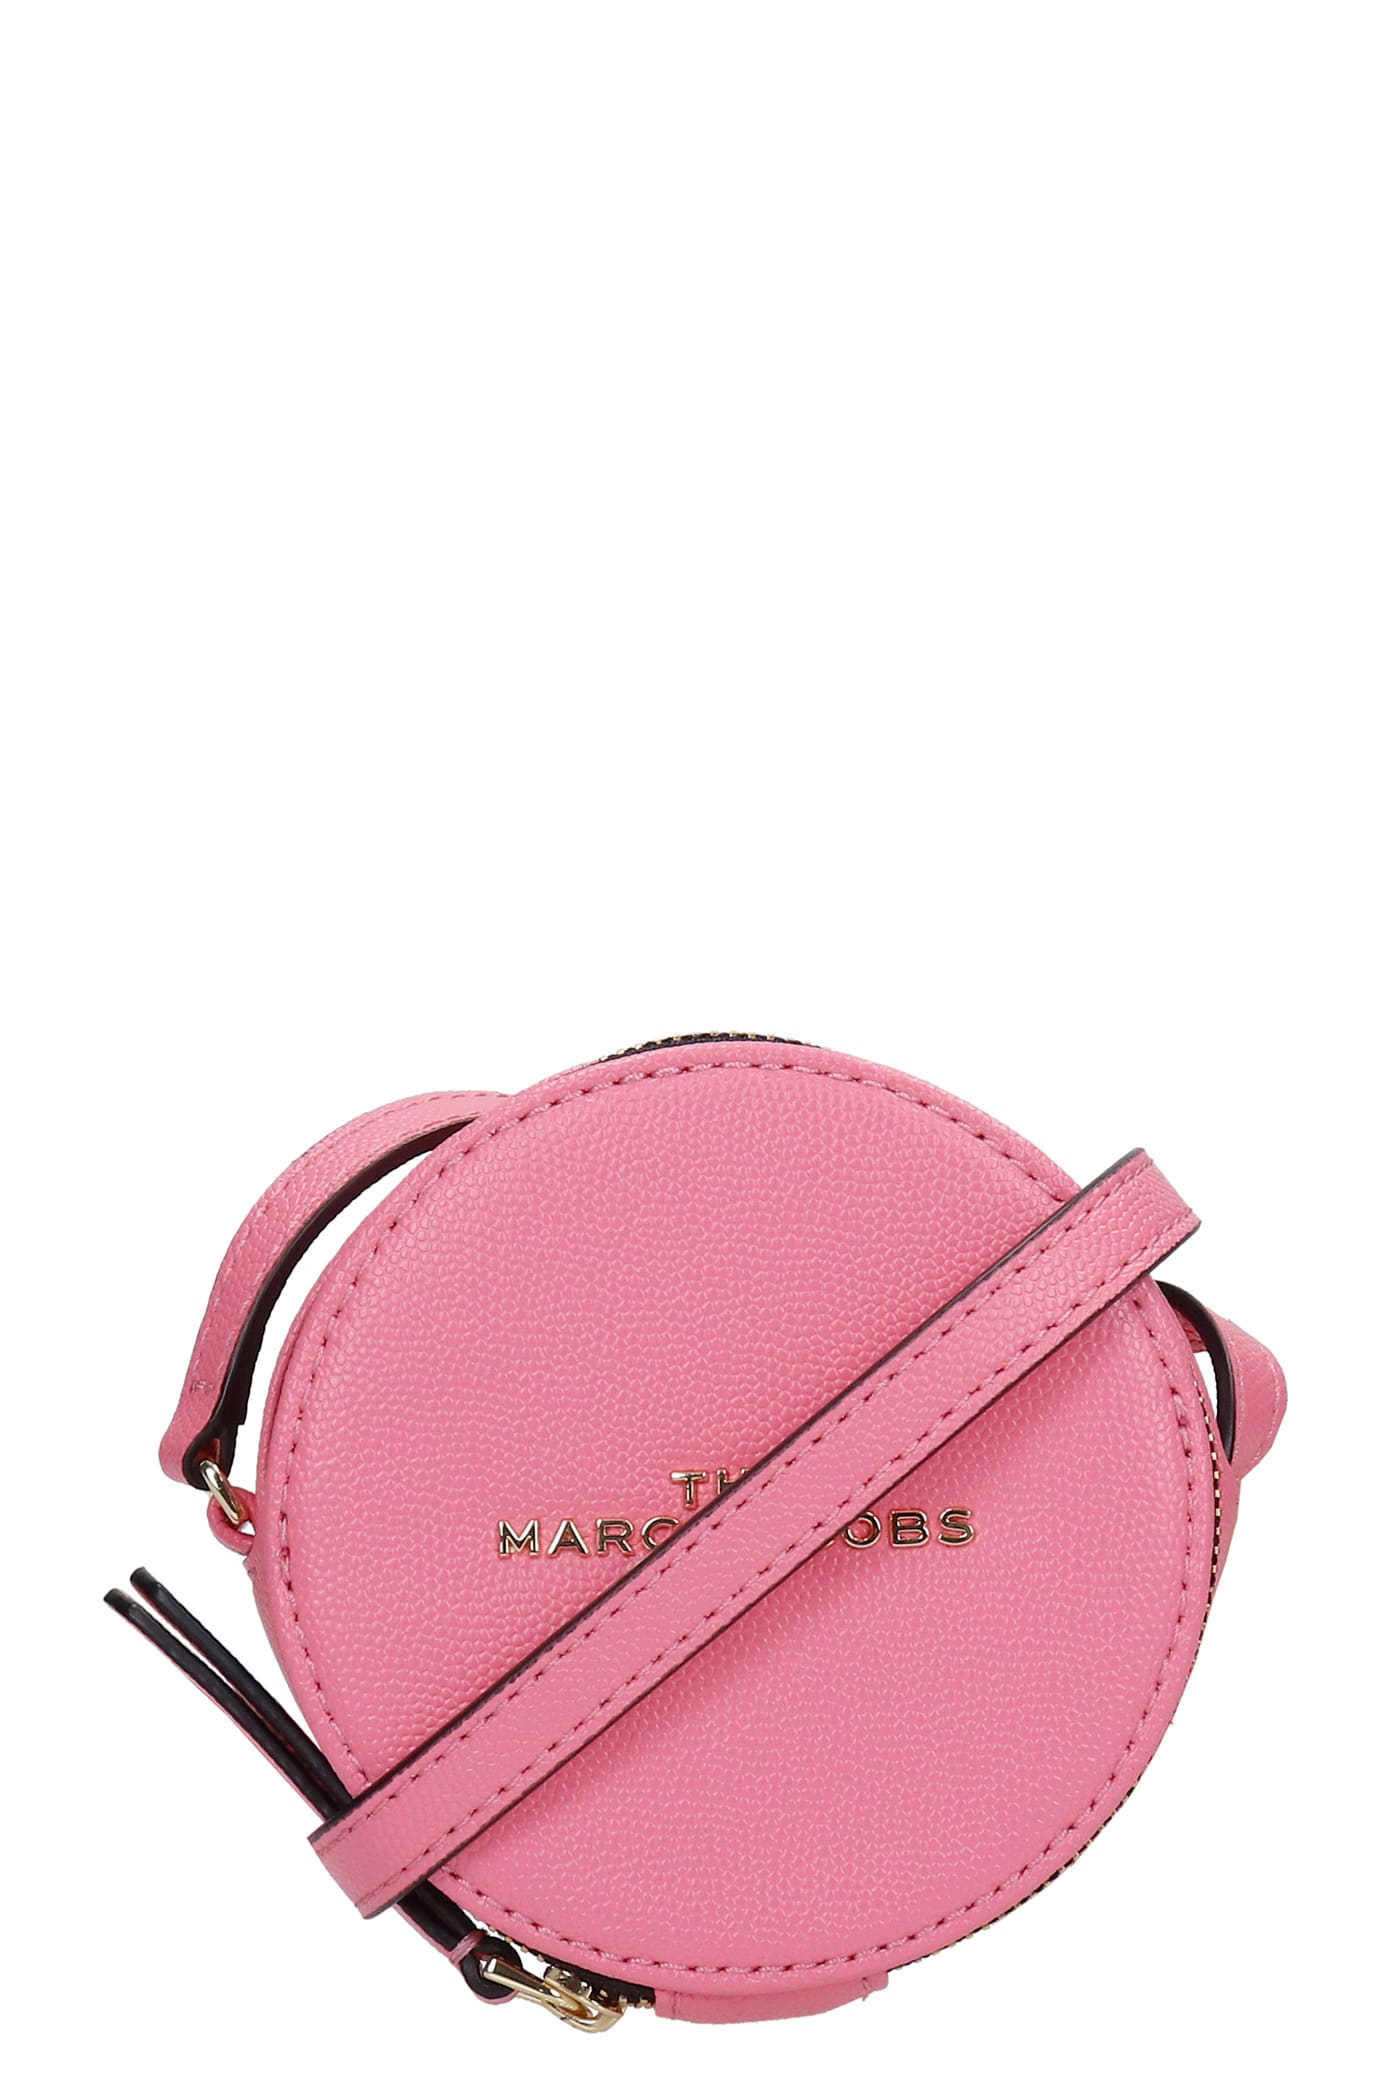 Marc Jacobs The Hot Spot Shoulder Bag In Rose-pink Leather